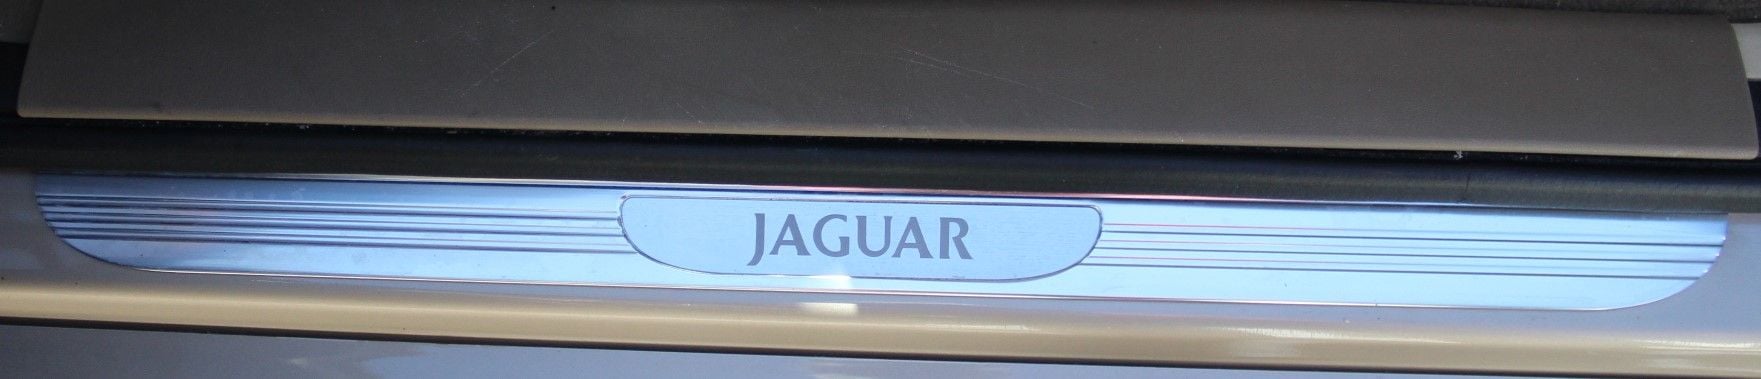 2003 Jaguar S-Type - Super clean low milage 2003 S-Type - Used - VIN sajea01t03fm59804 - 6 cyl - 2WD - Automatic - Sedan - Beige - Summerville, SC 29483, United States